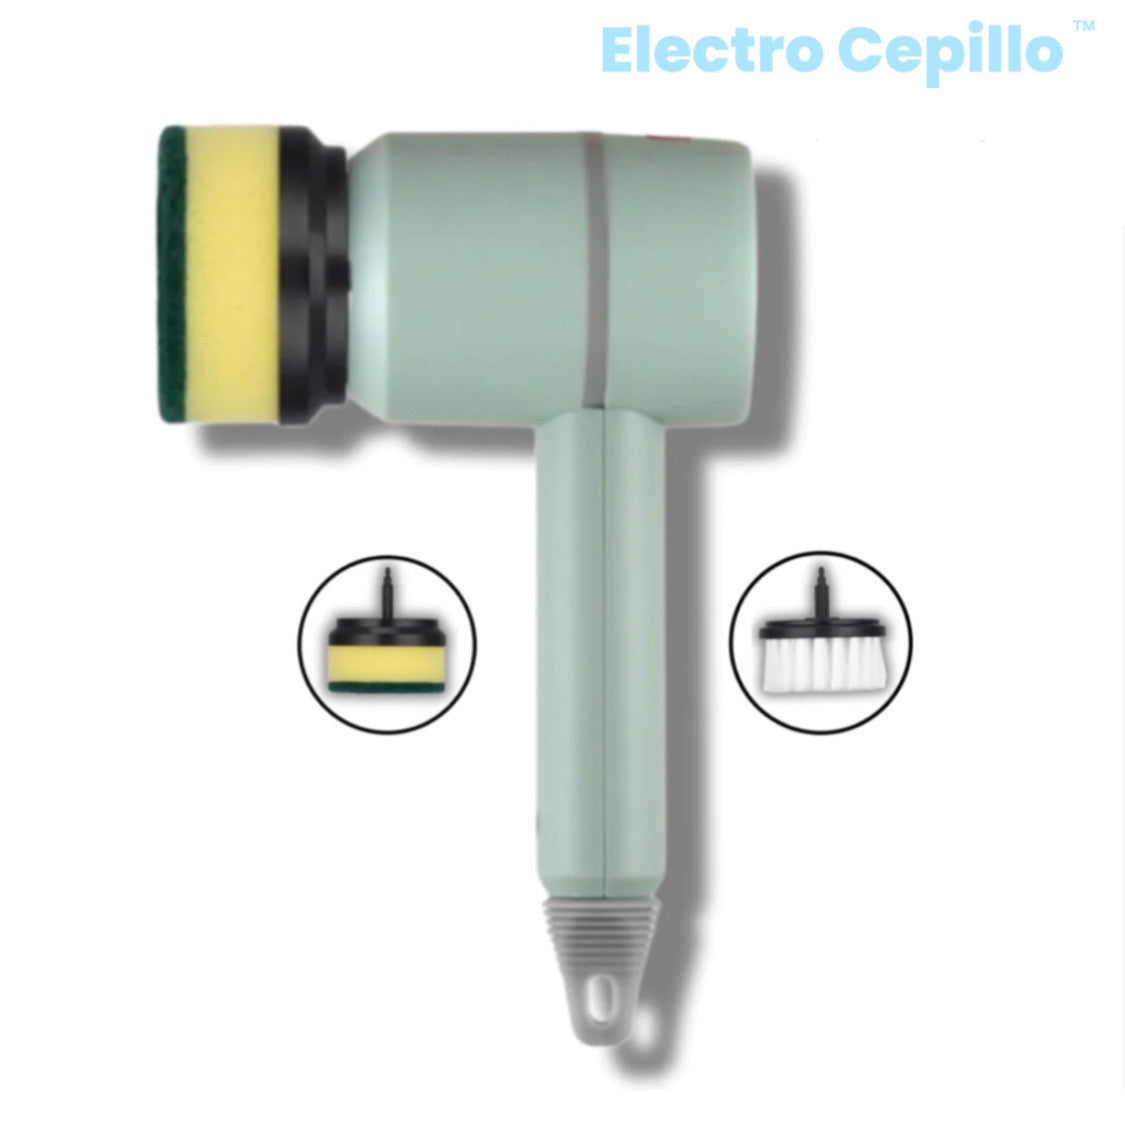 Electro Cepillo Pro™